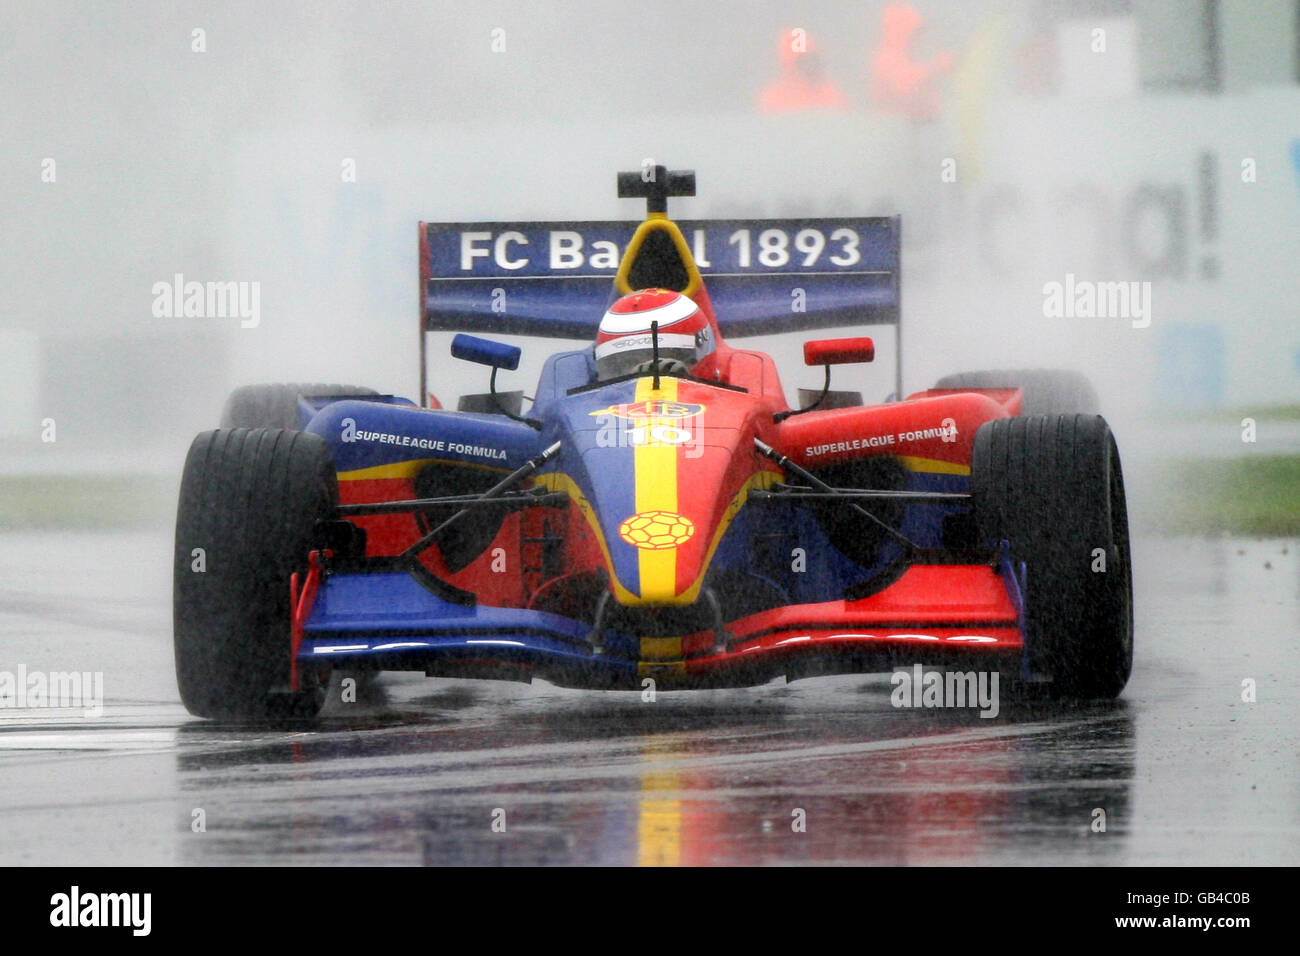 Motor Racing Superleague Formula Race Donington Park Fc Basel S Max Wissel In Action Stock Photo Alamy